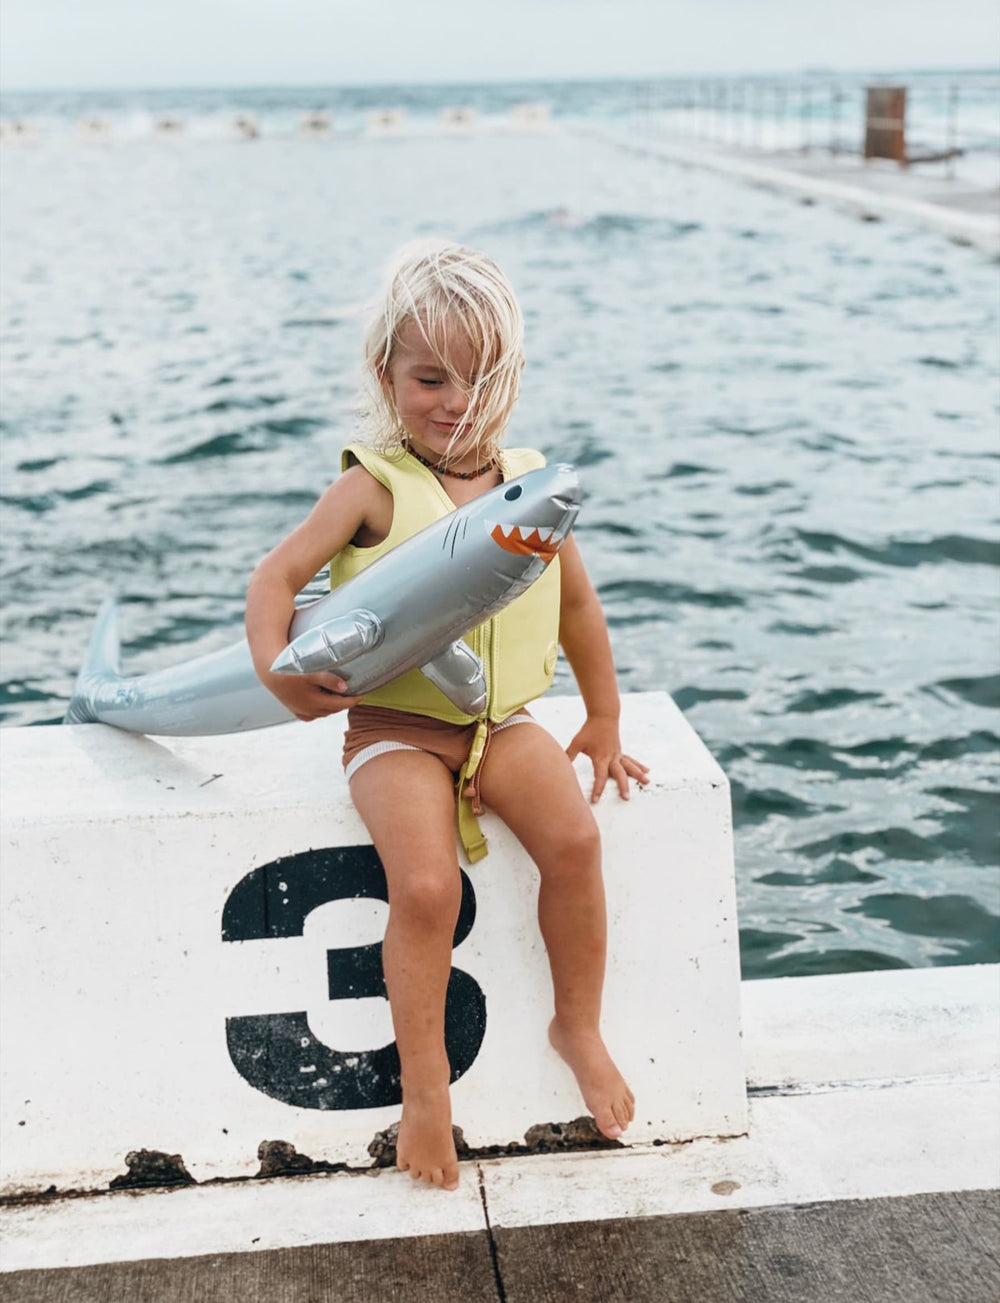 Sunnylife Inflatable Buddy Shark Attack - Silver Haj